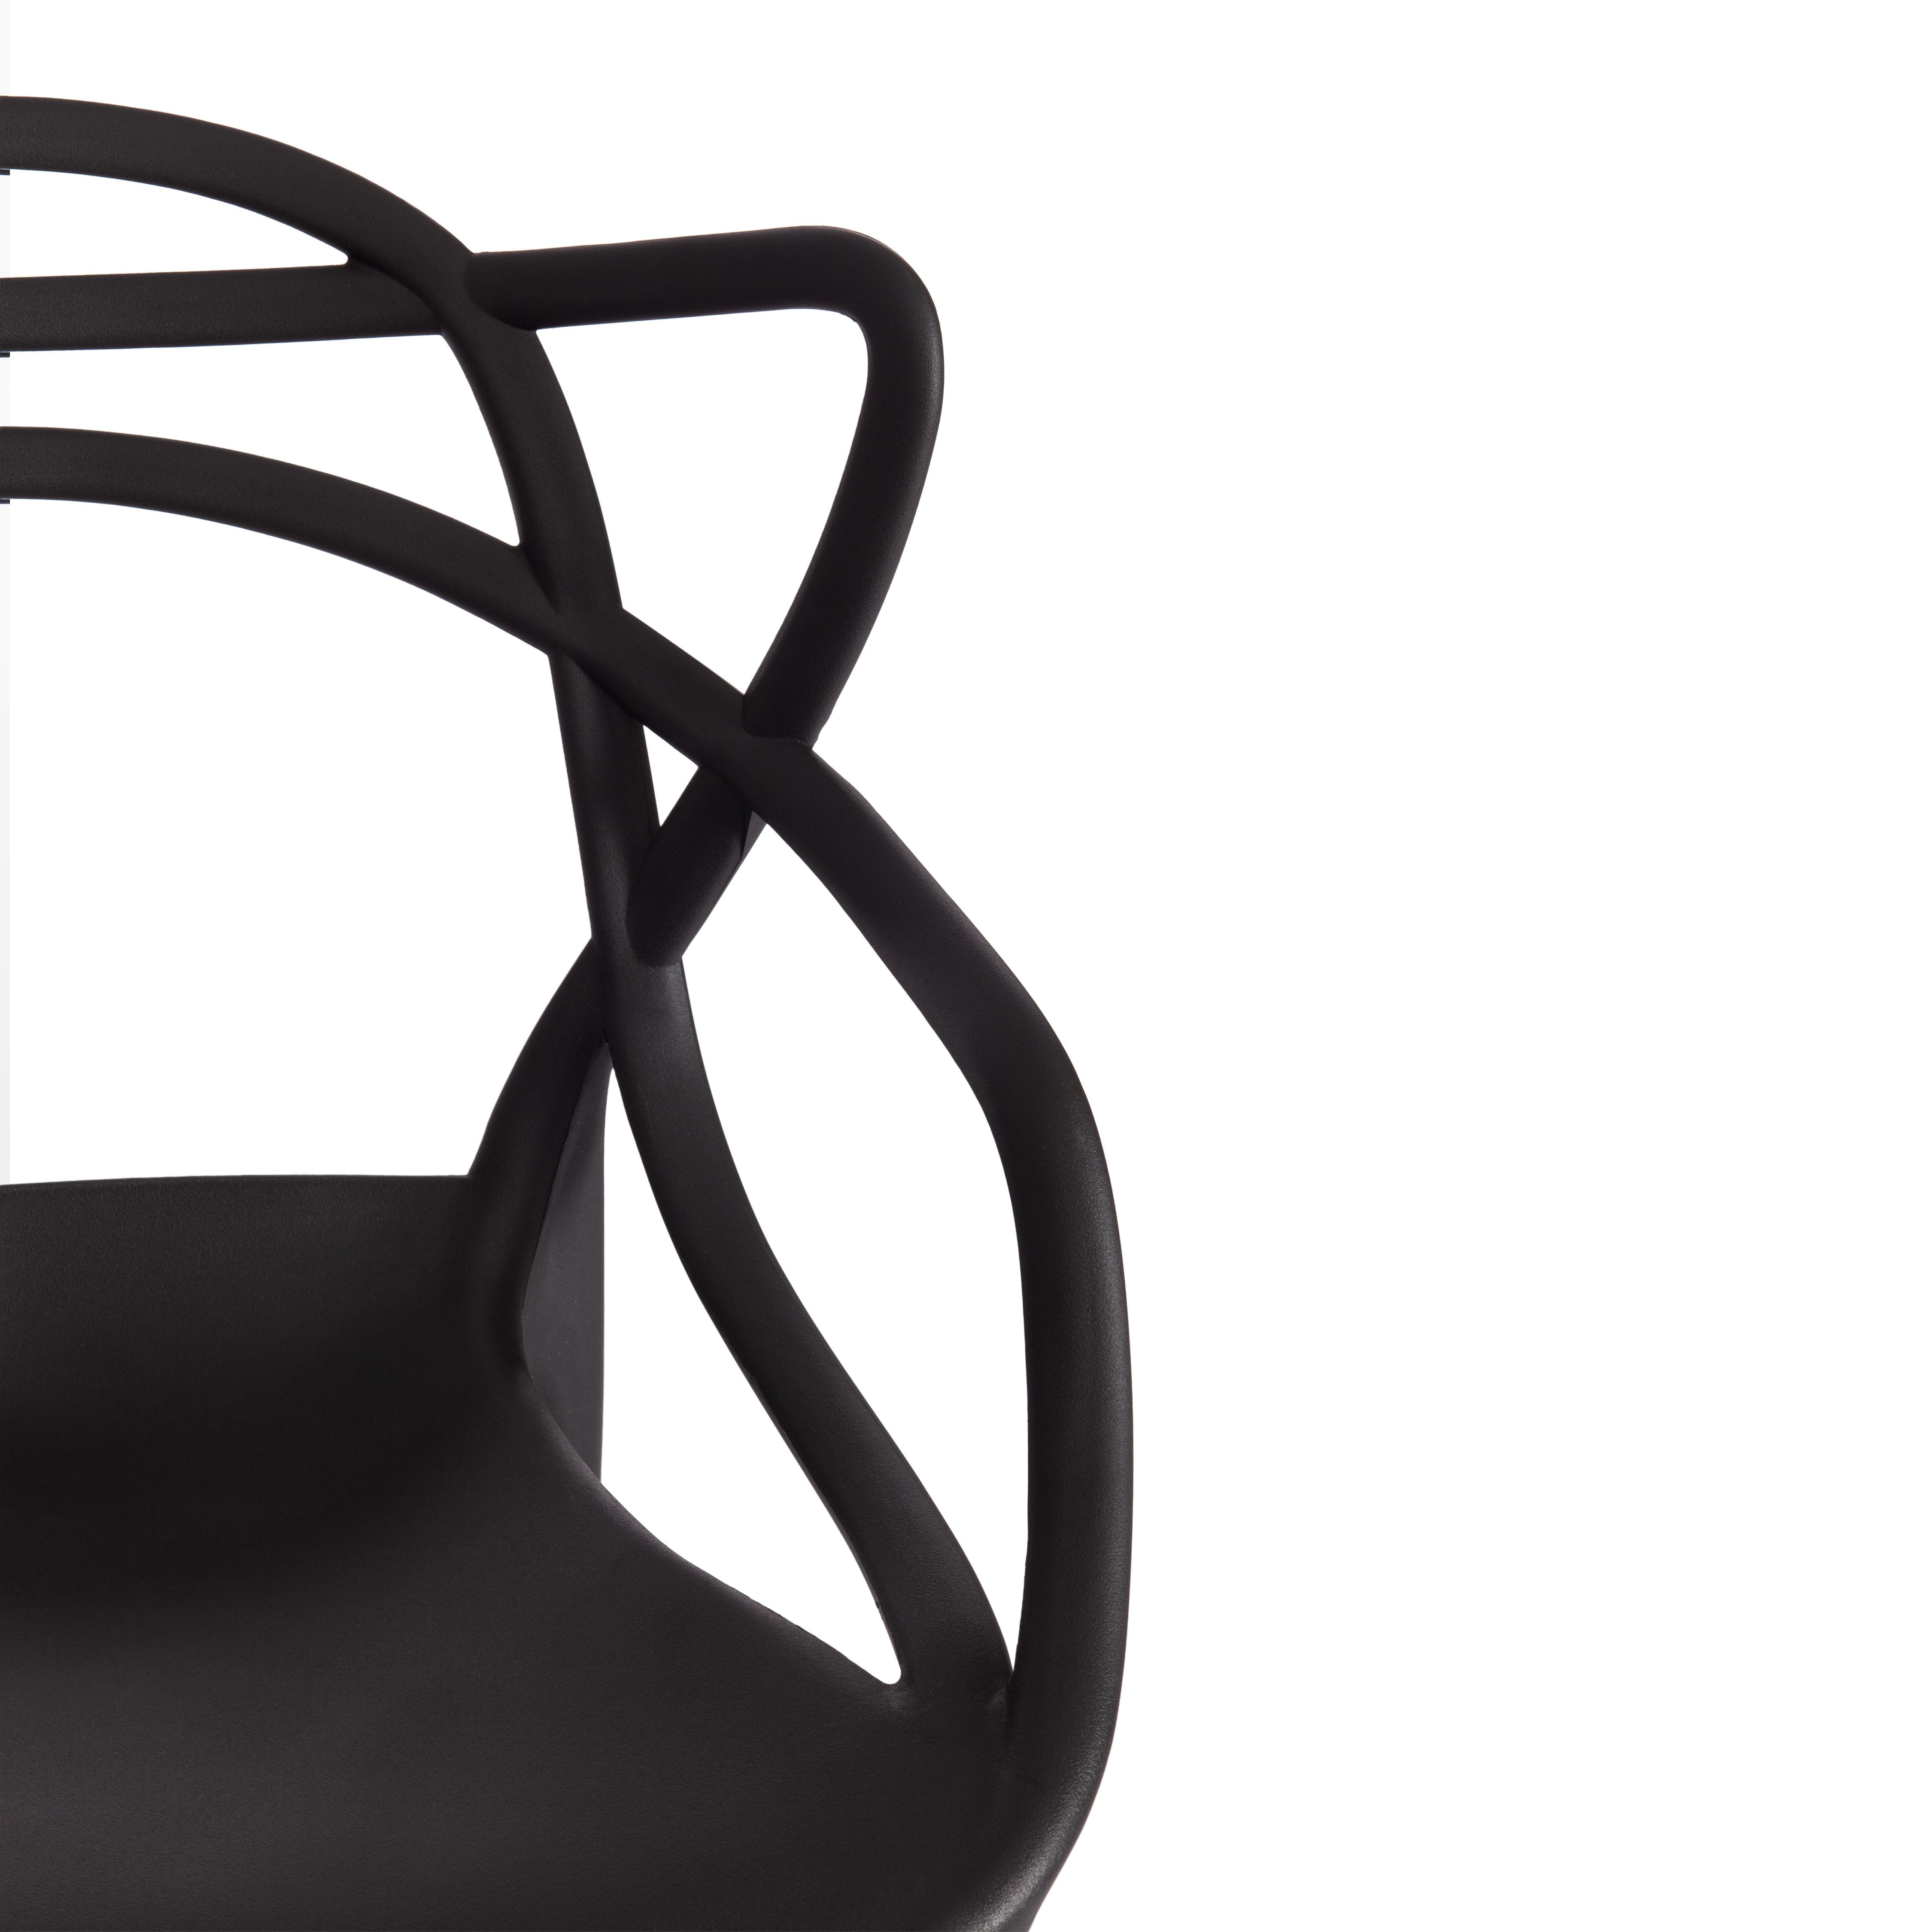 Стул Cat Chair (mod. 028) пластик, 54,5*56*84см, черный, 3010